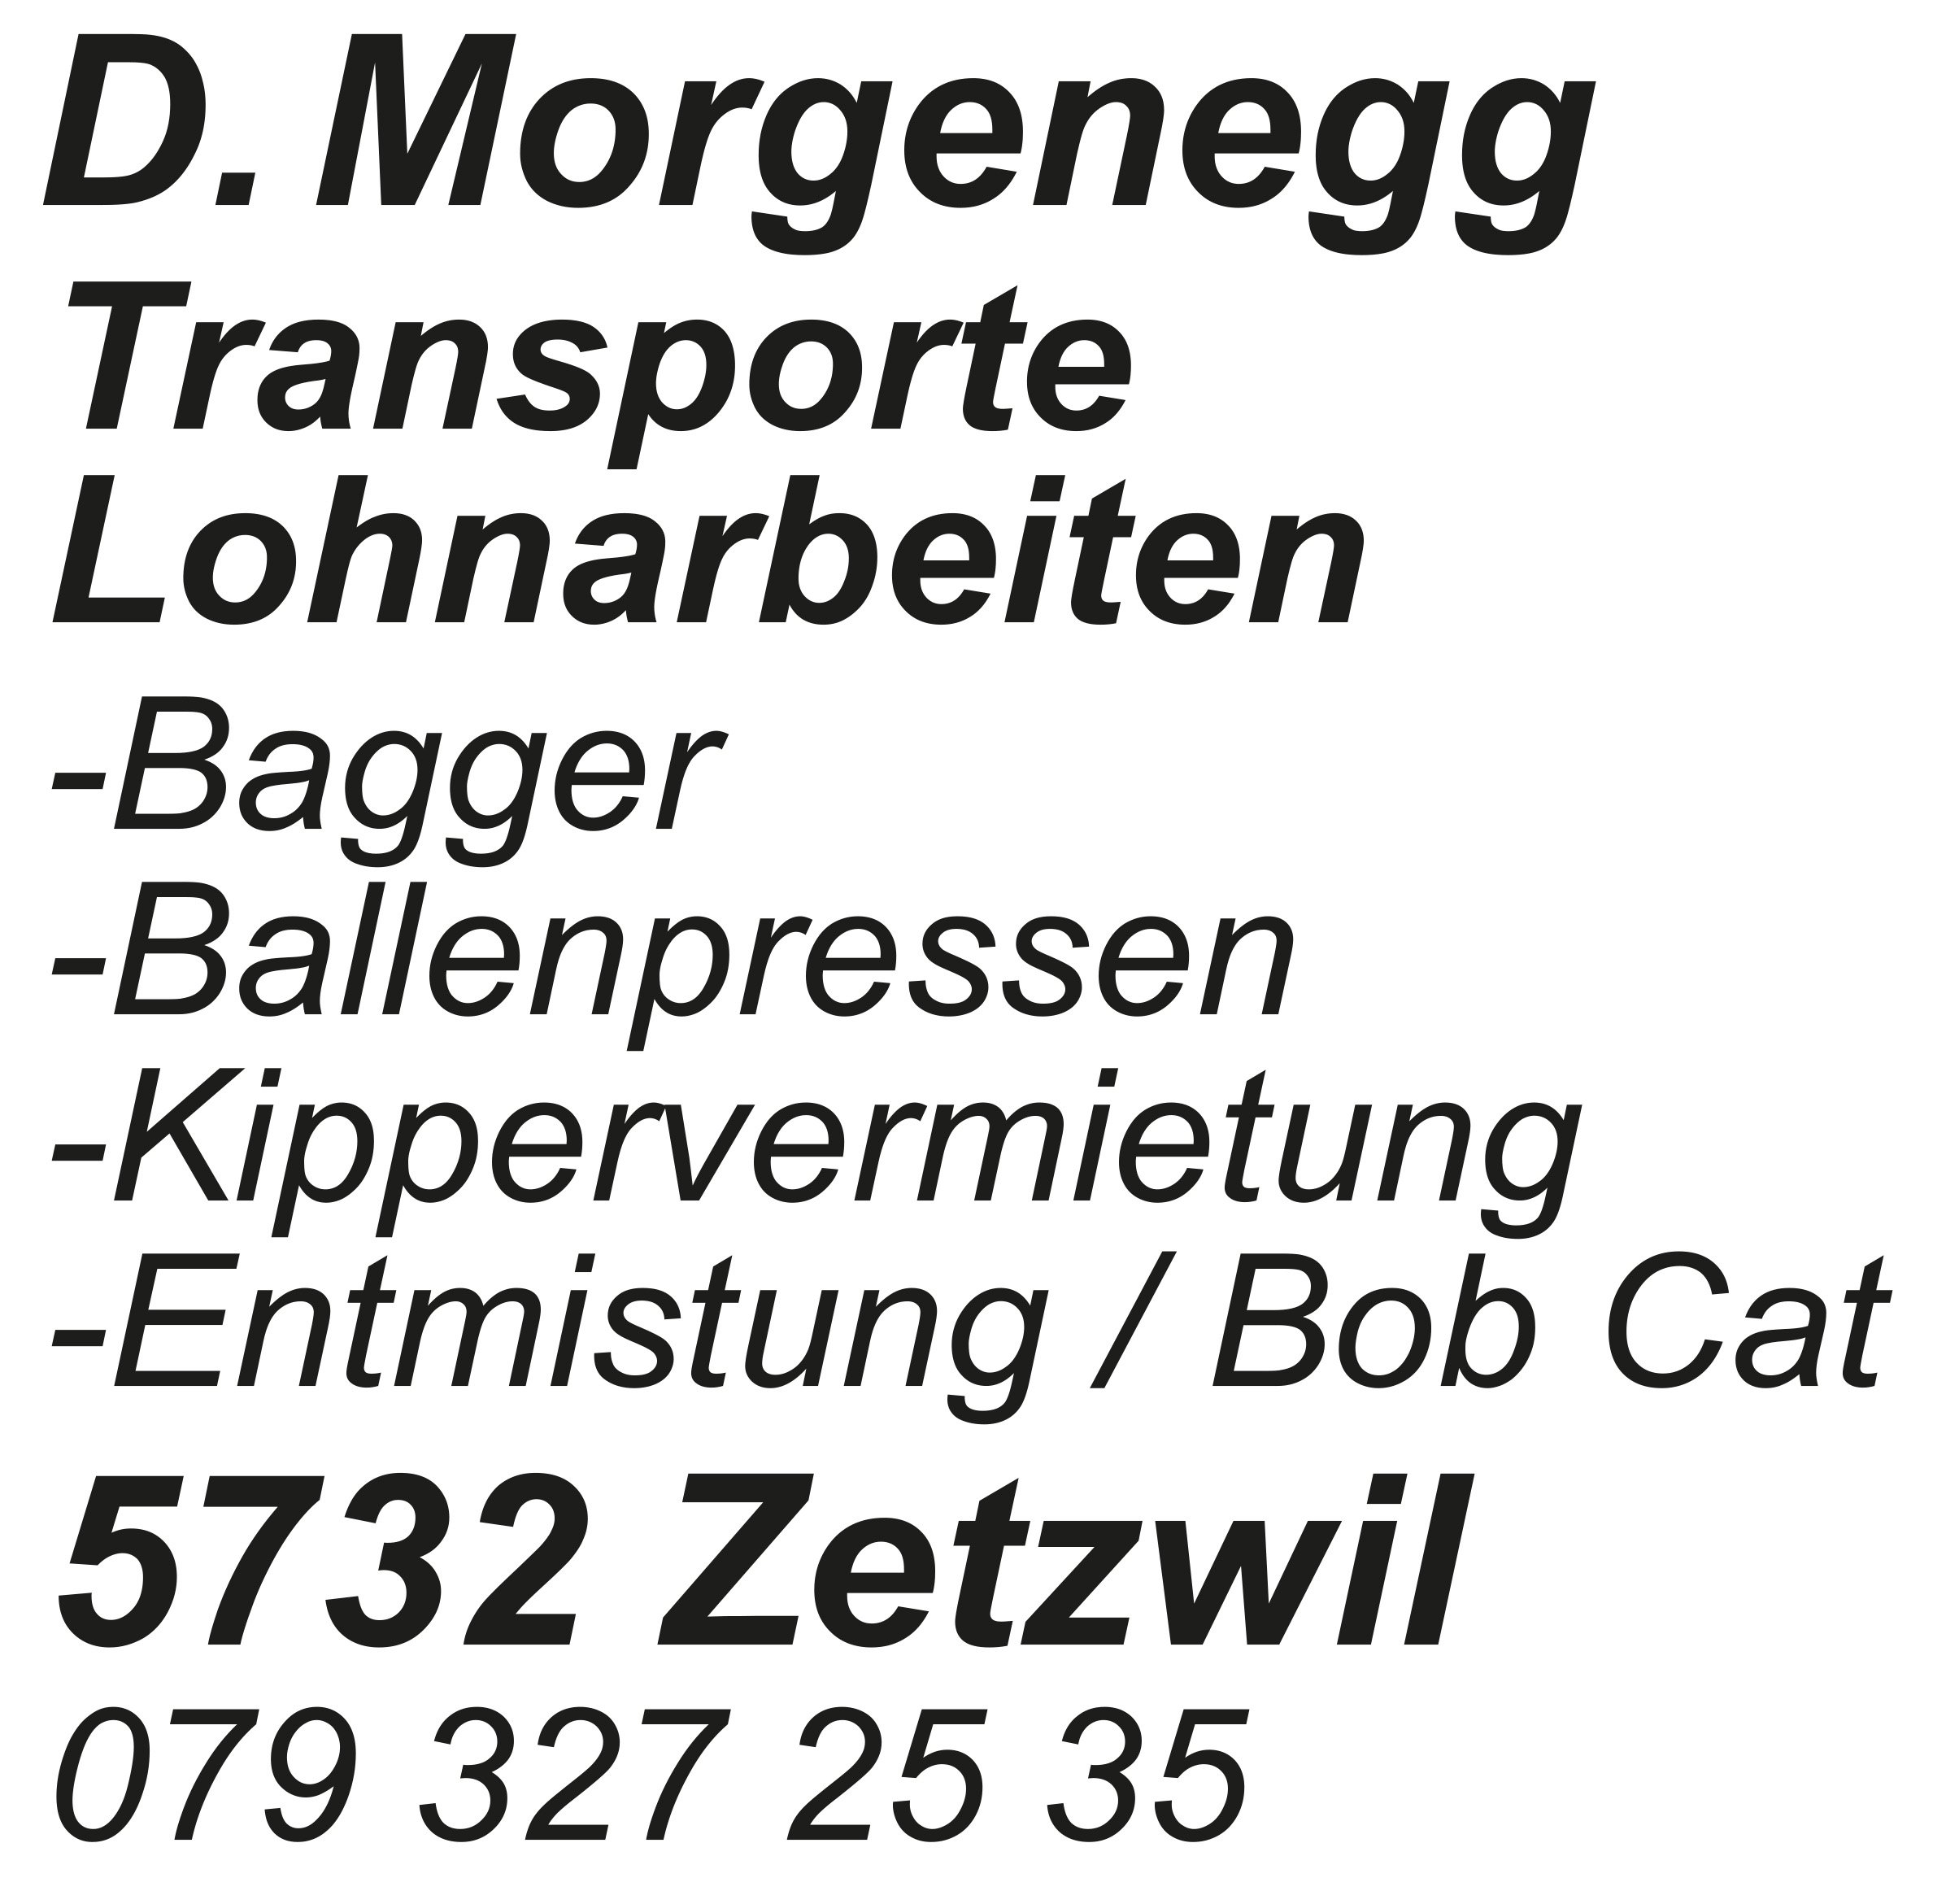 D. Morgenegg Transporte & Lohnarbeiten